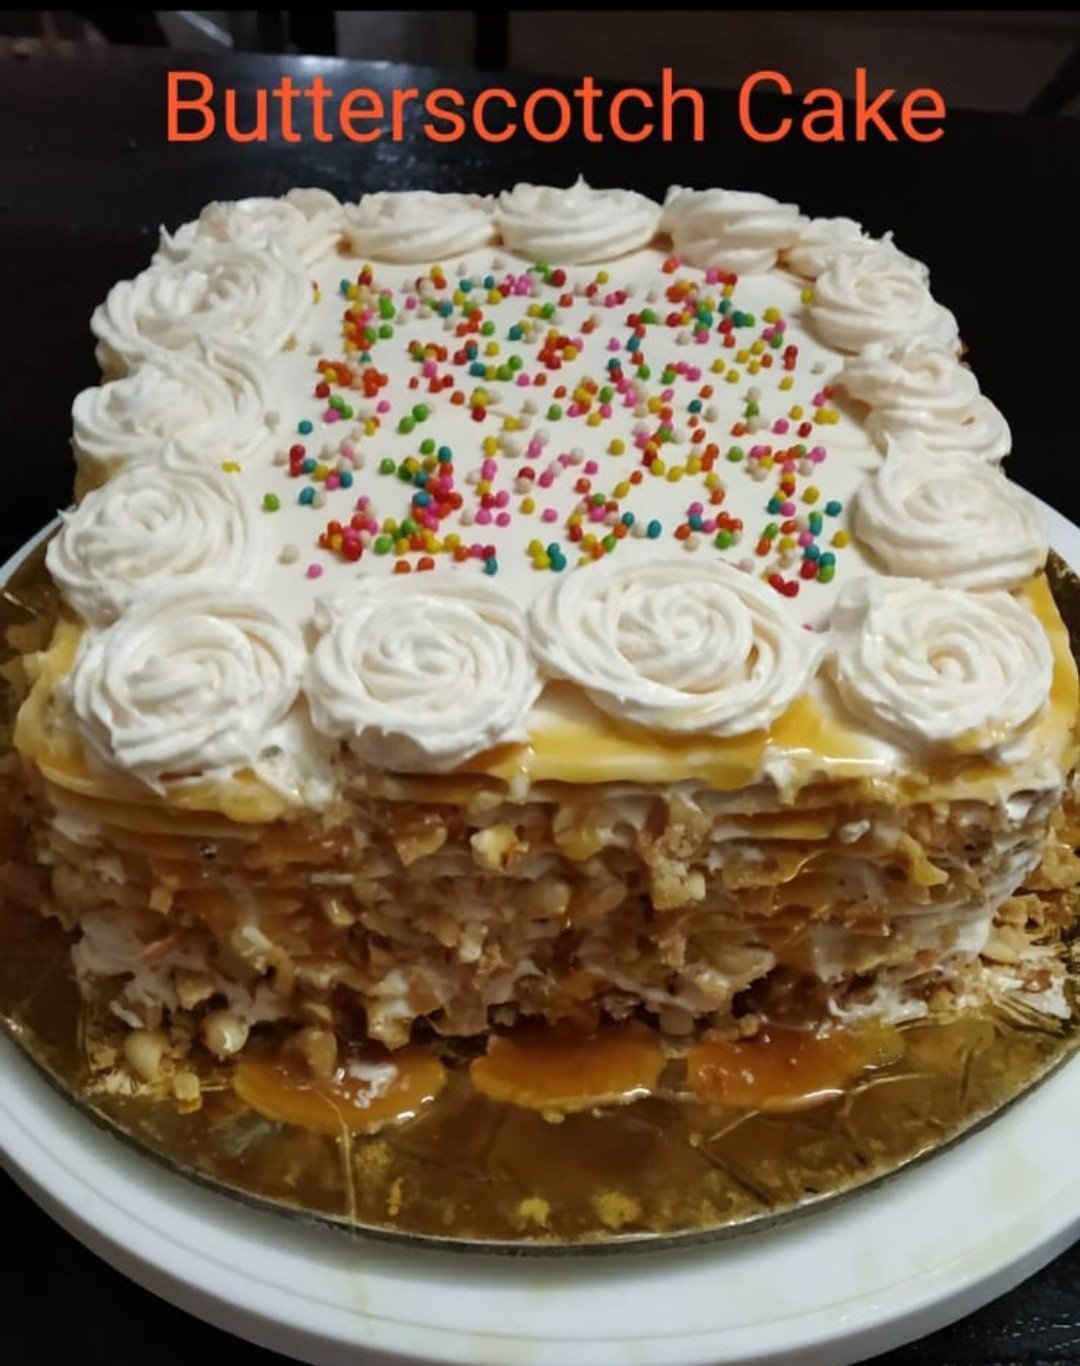 Butterscotch Cake (1 kg)